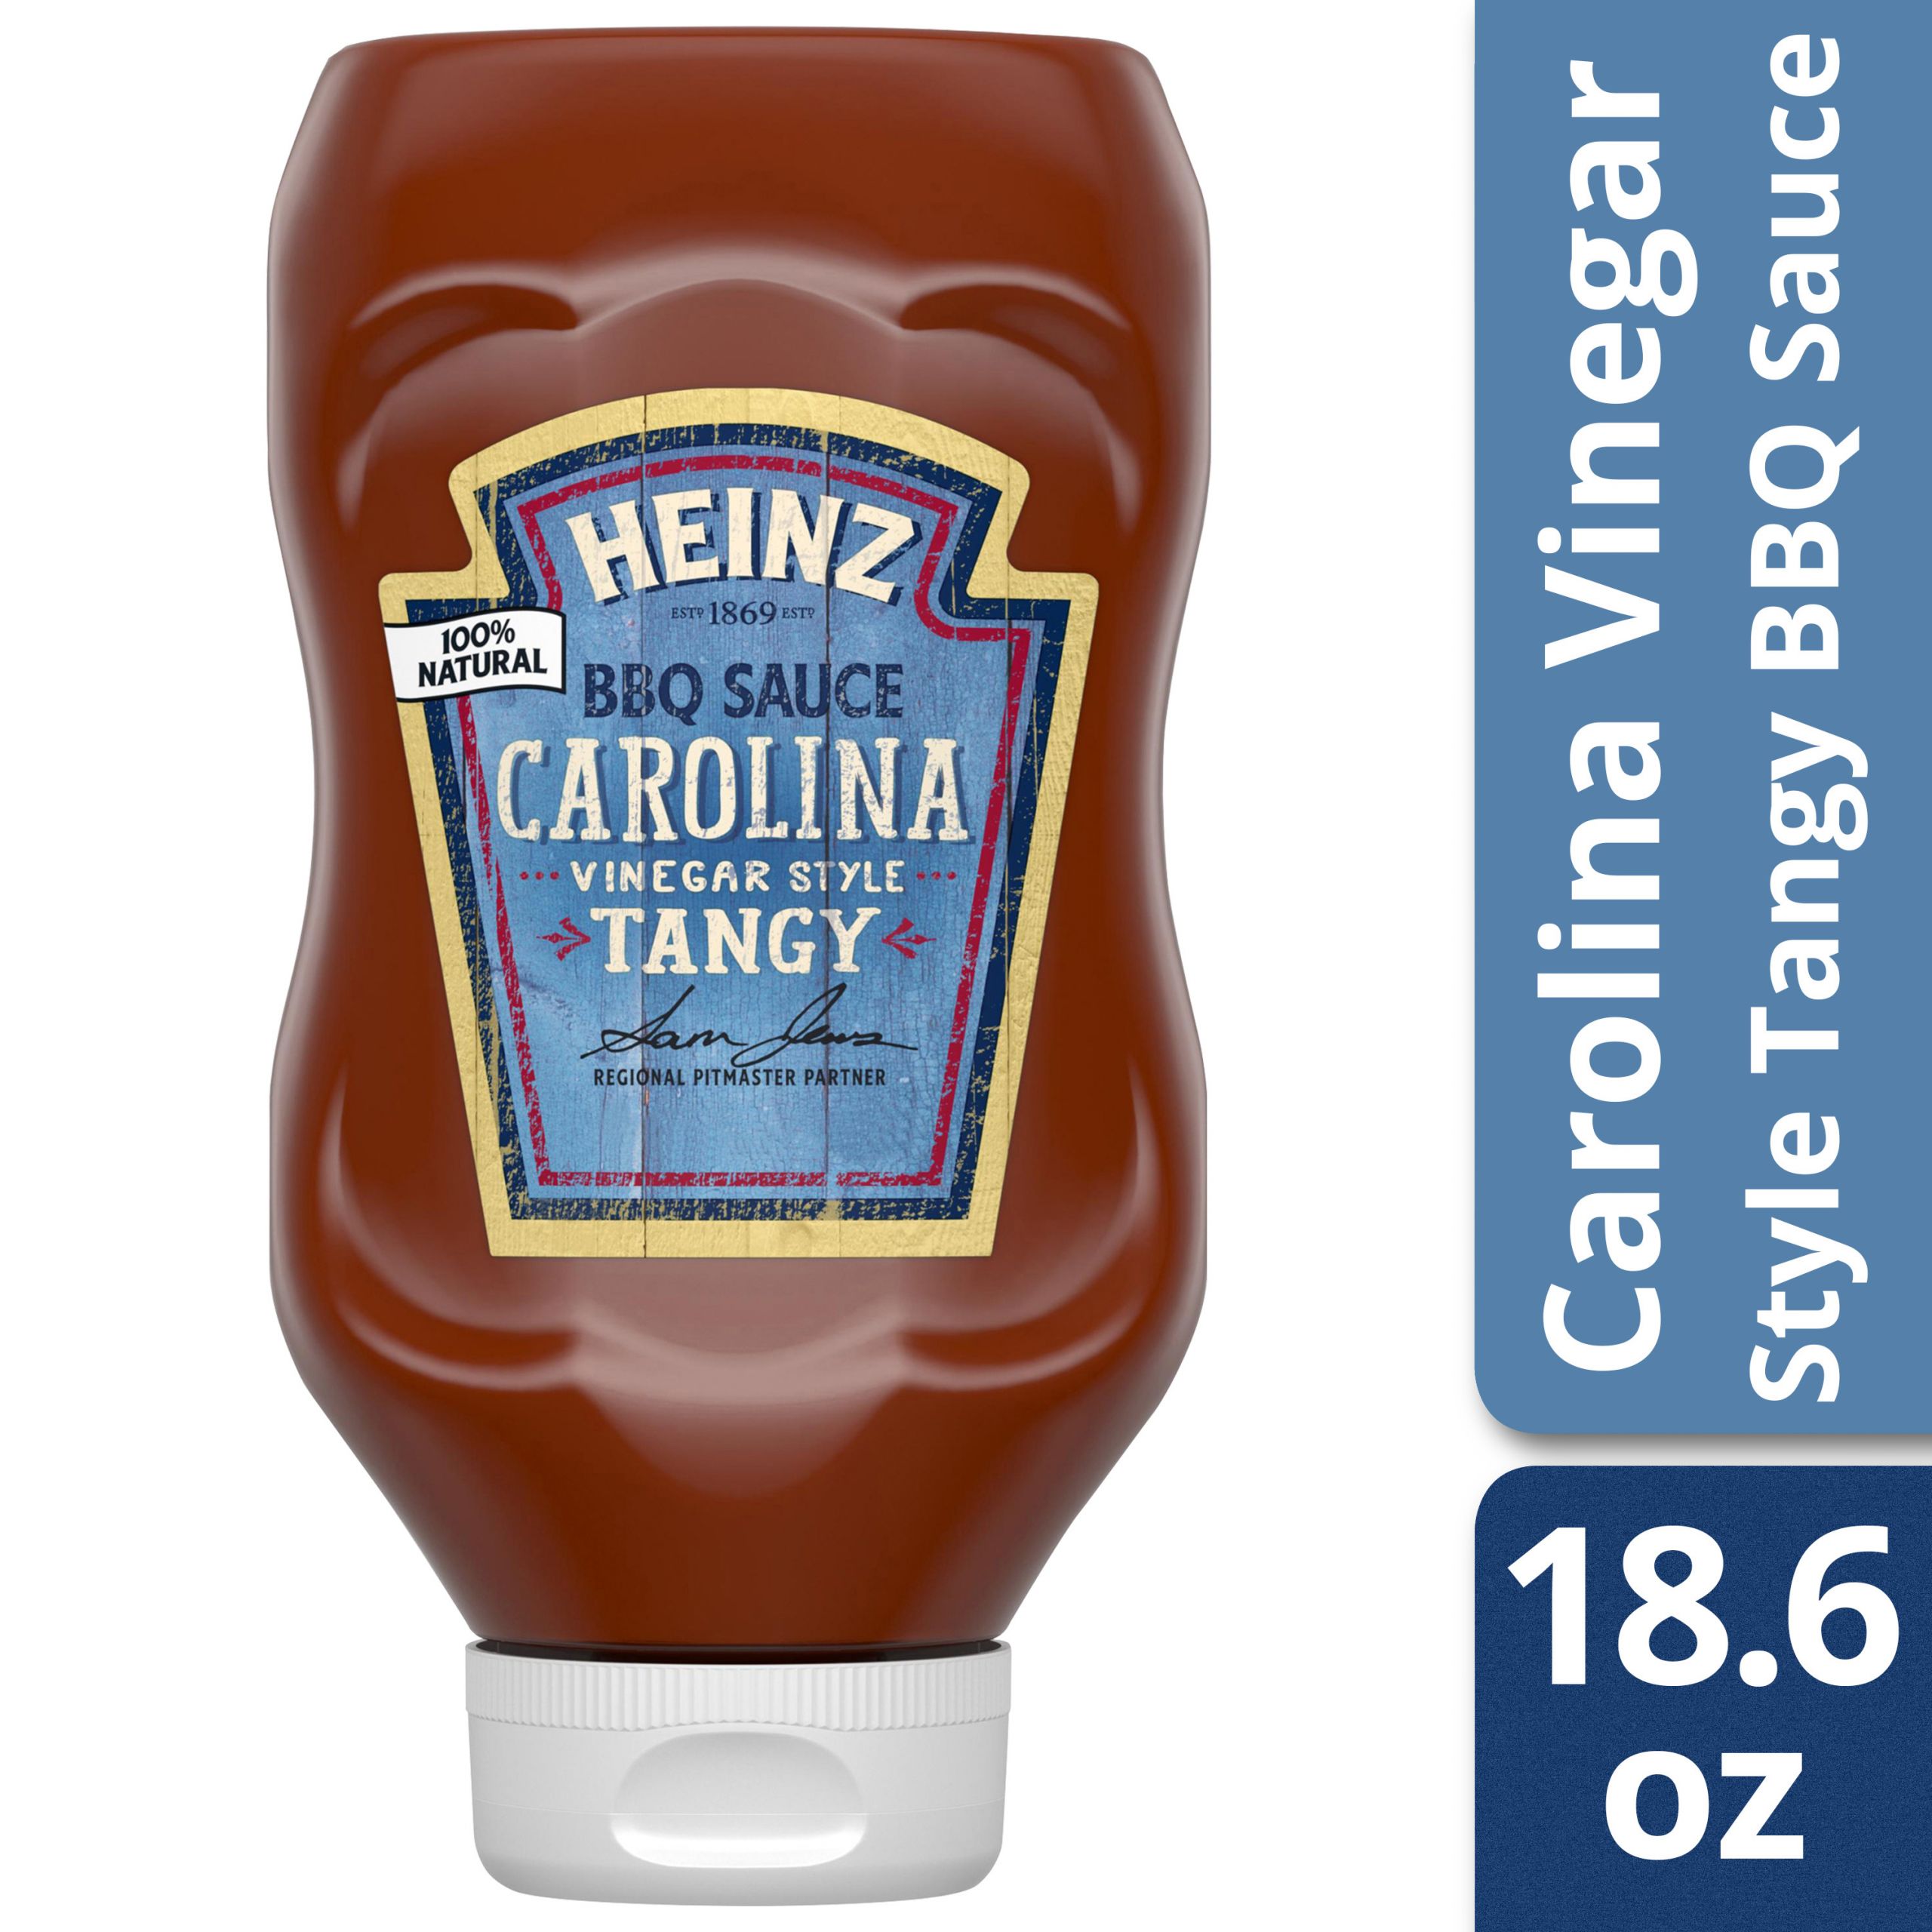 Heinz Carolina Bbq Sauce
 Heinz Carolina Vinegar Style Tangy BBQ Sauce 18 6 oz